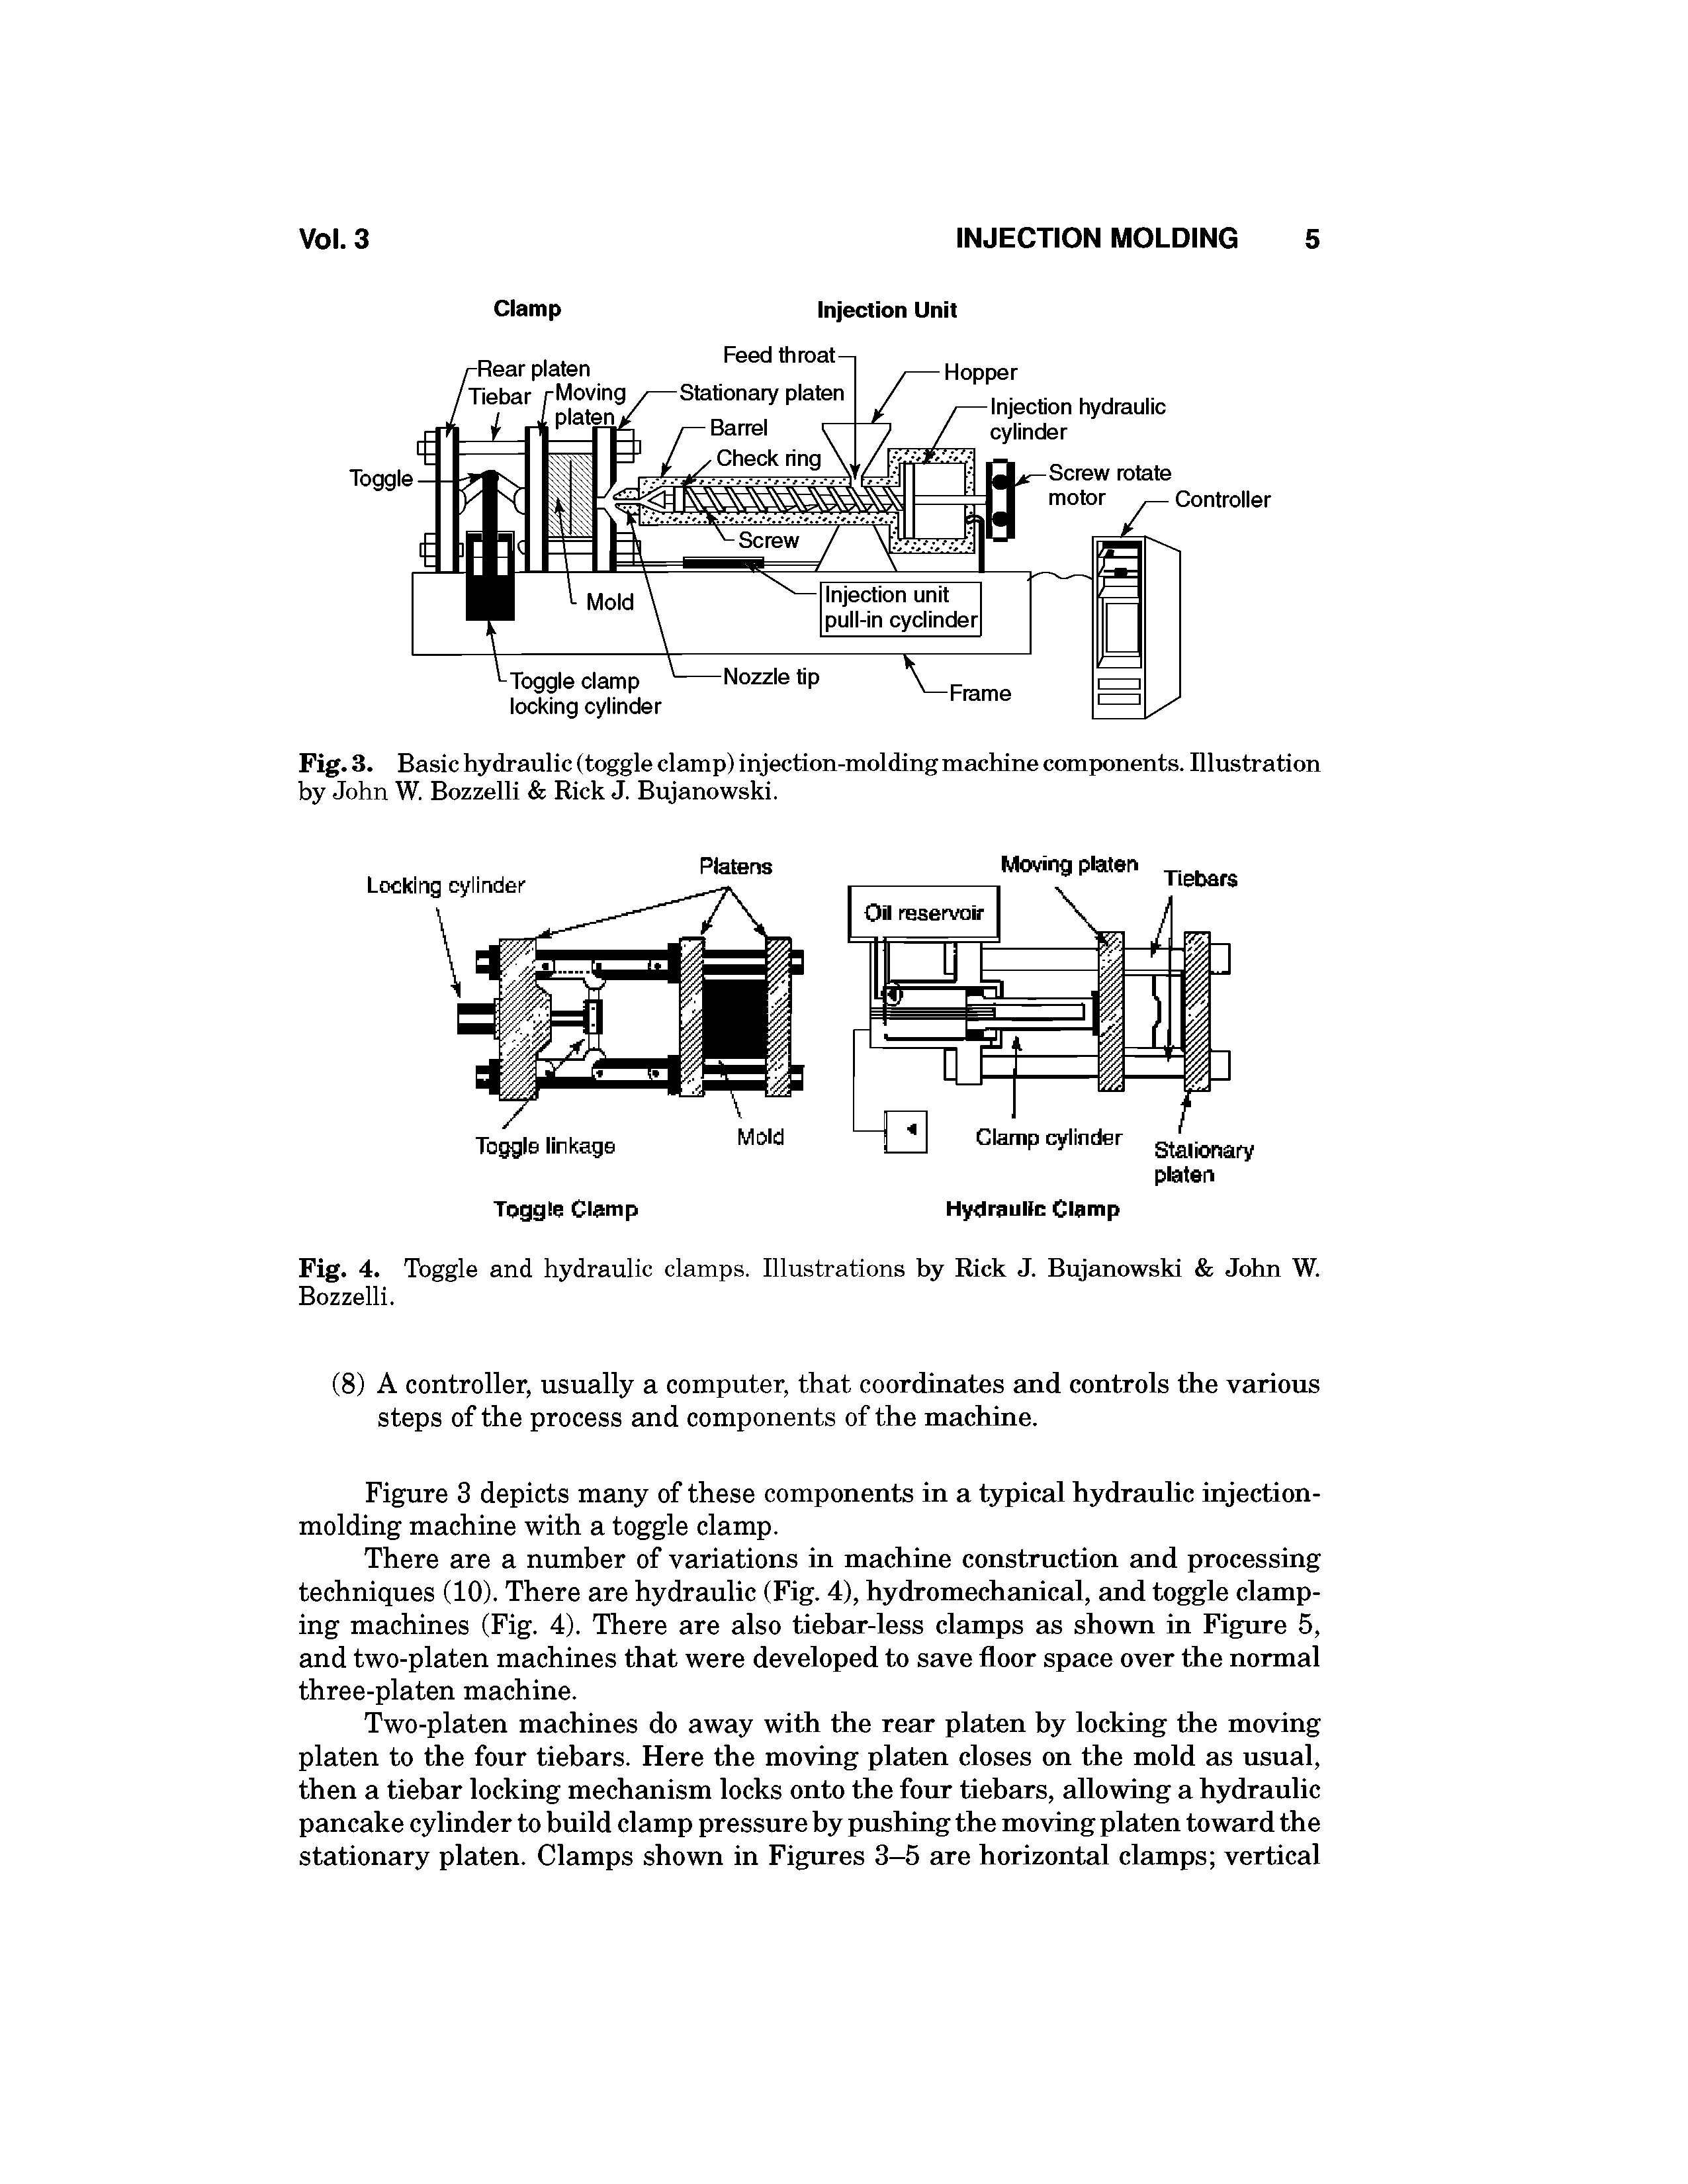 Fig. 3. Basic hydraulic (toggle clamp) injection-molding machine components. Illustration by John W. Bozzelli Rick J. Bujanowski.